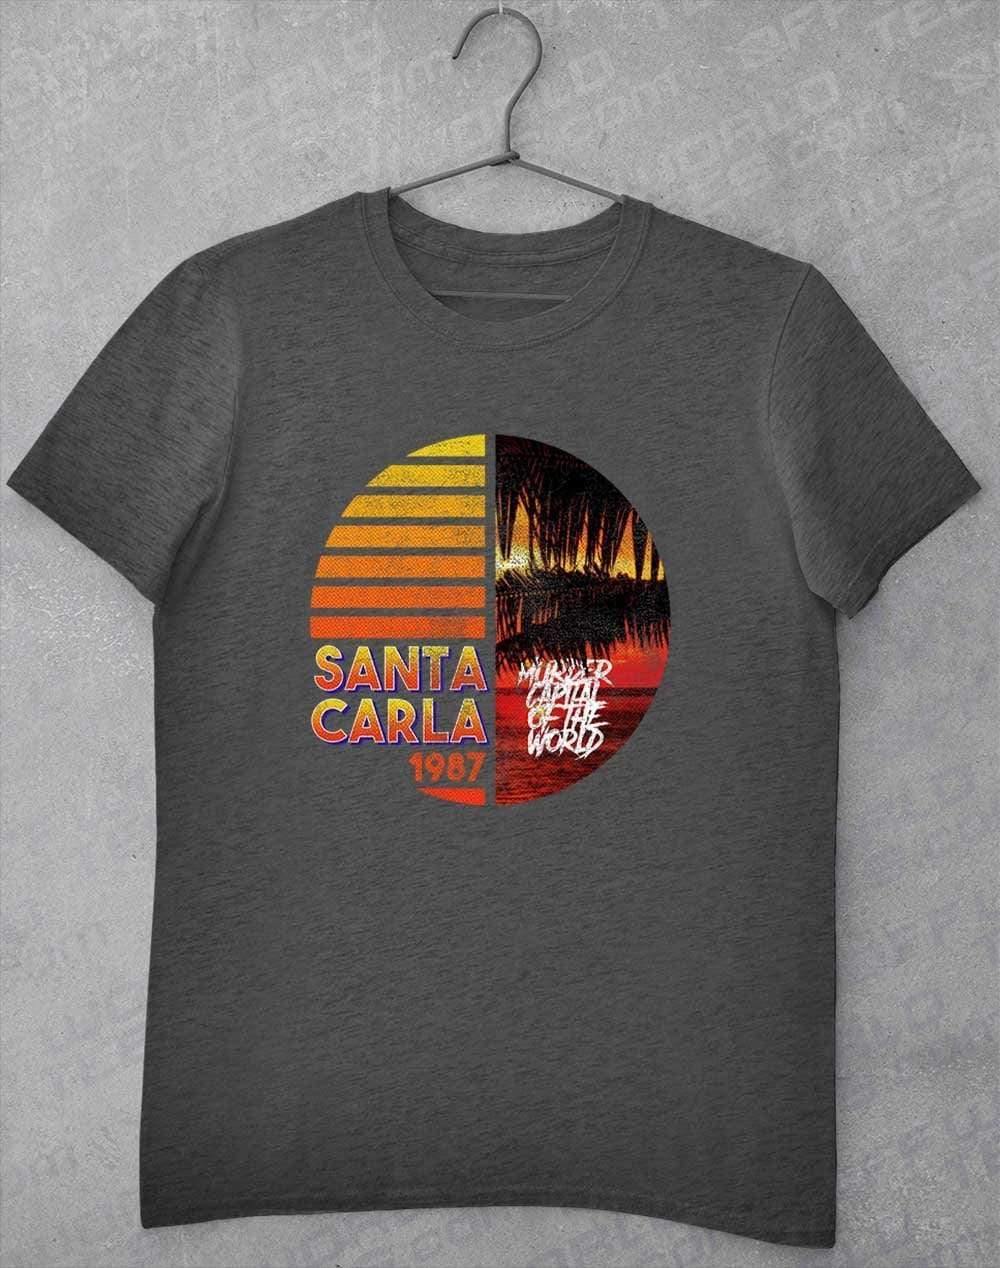 Santa Carla 1987 - T-Shirt S / Dark Heather  - Off World Tees